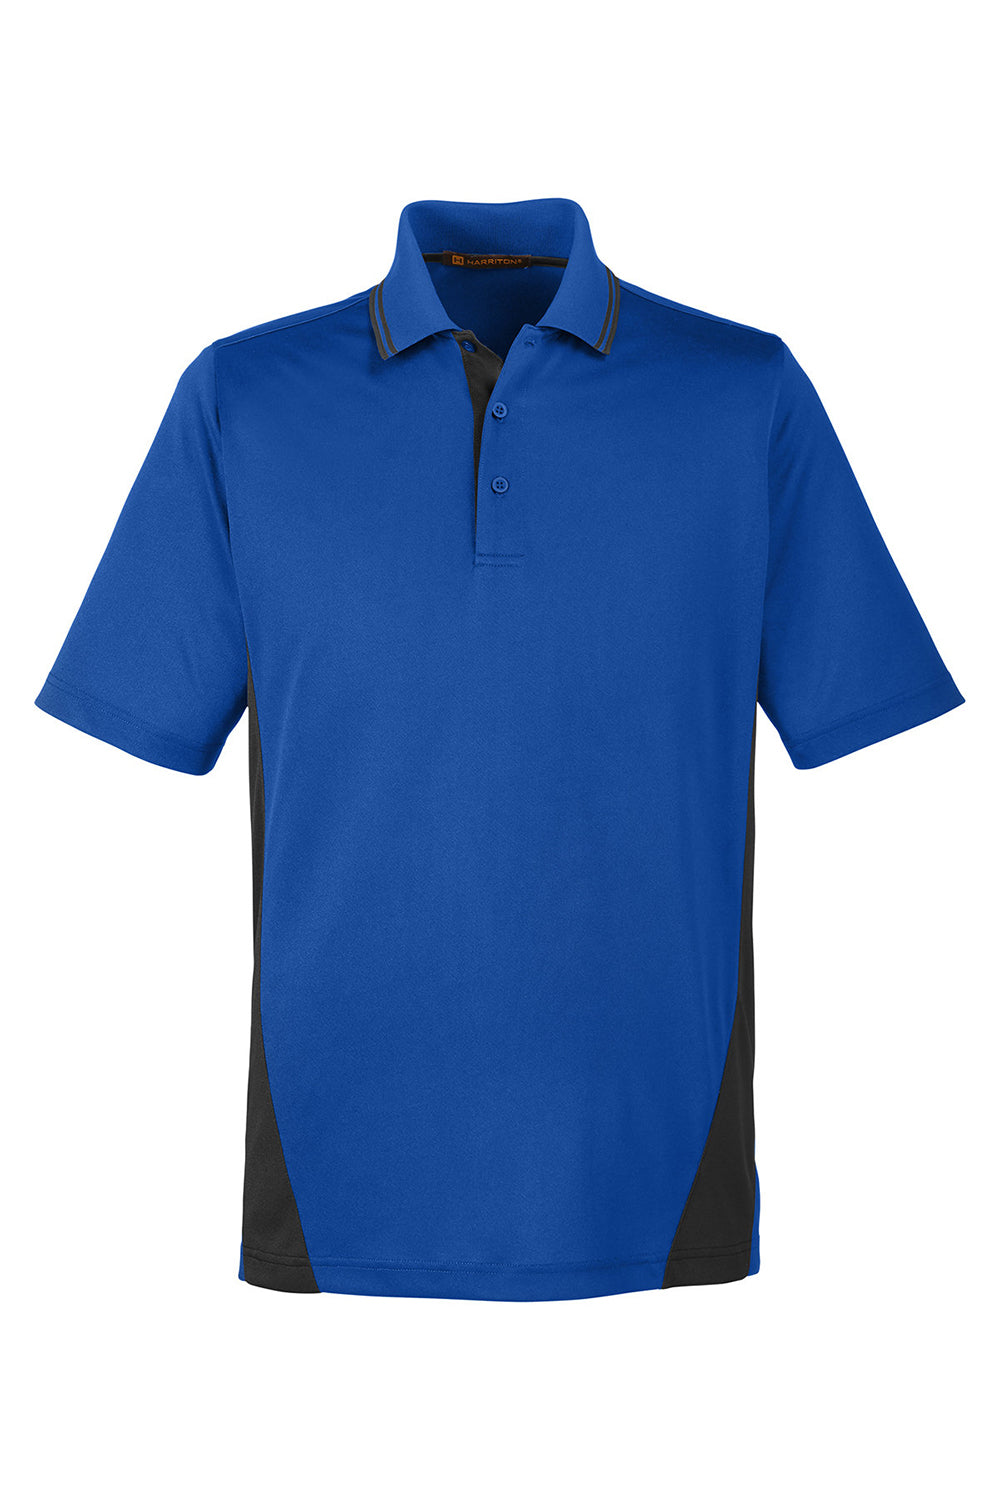 Harriton M386/M386T Mens Flash Performance Moisture Wicking Colorblock Short Sleeve Polo Shirt True Royal Blue/Black Flat Front